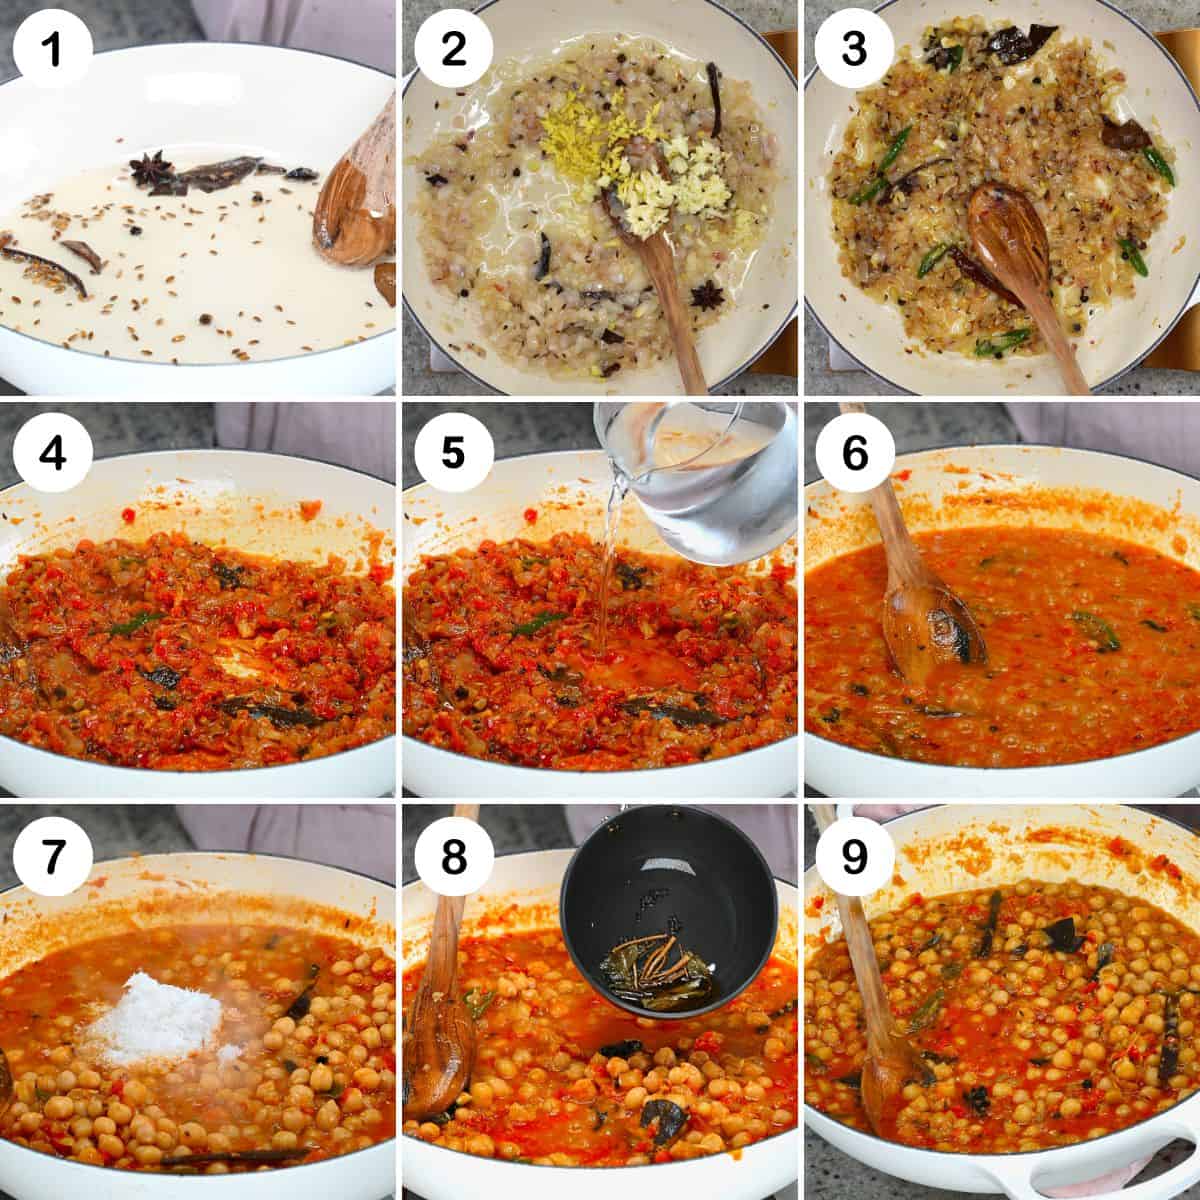 Steps to make chana masala